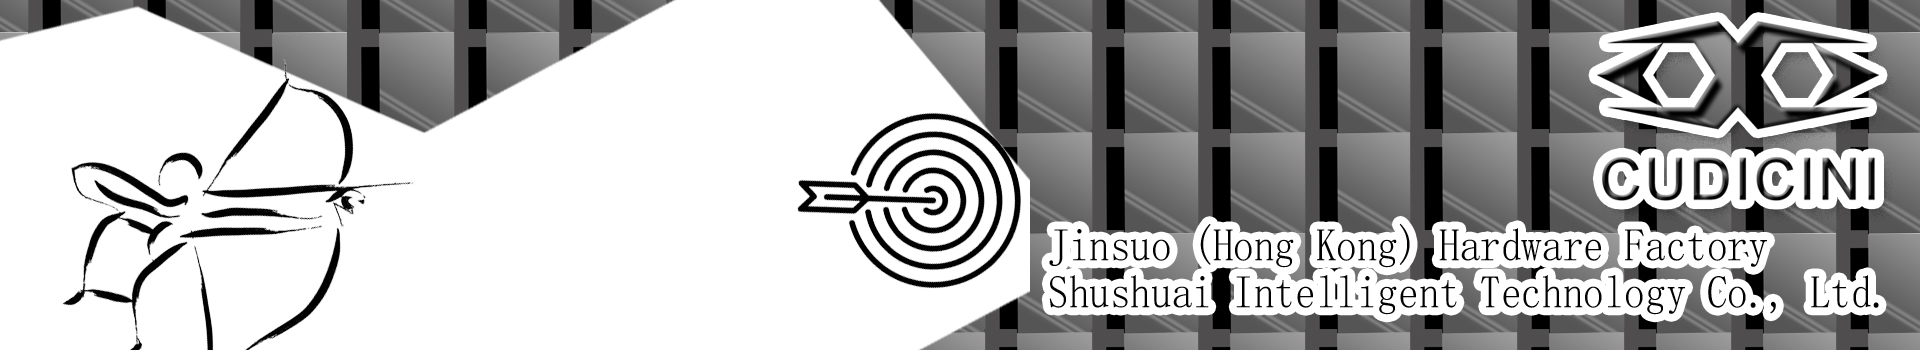 KUSHUAI Intelligent Technology Co., Ltd